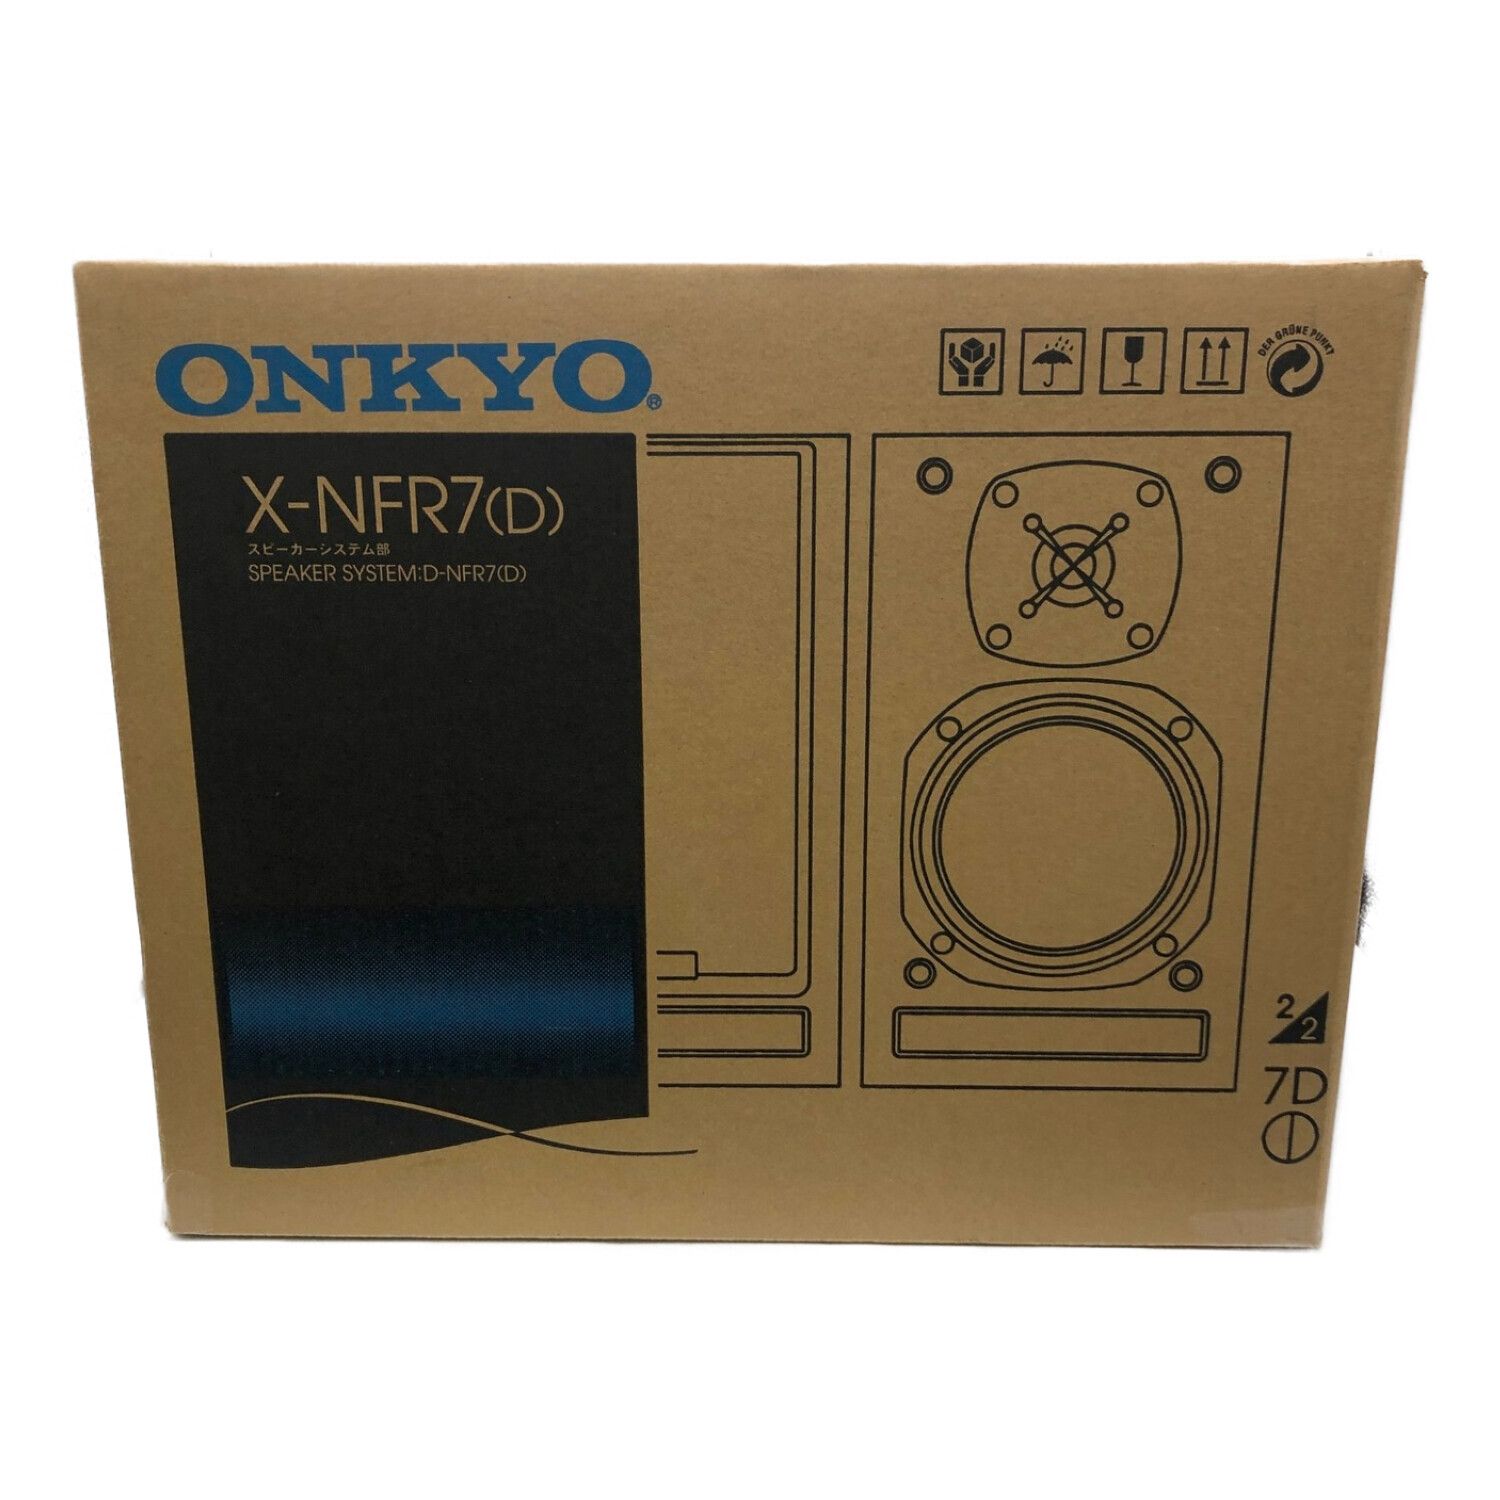 Onkyo (オンキヨー) スピーカーシステム部 X-NFR7FX 00000j5890706134 ...